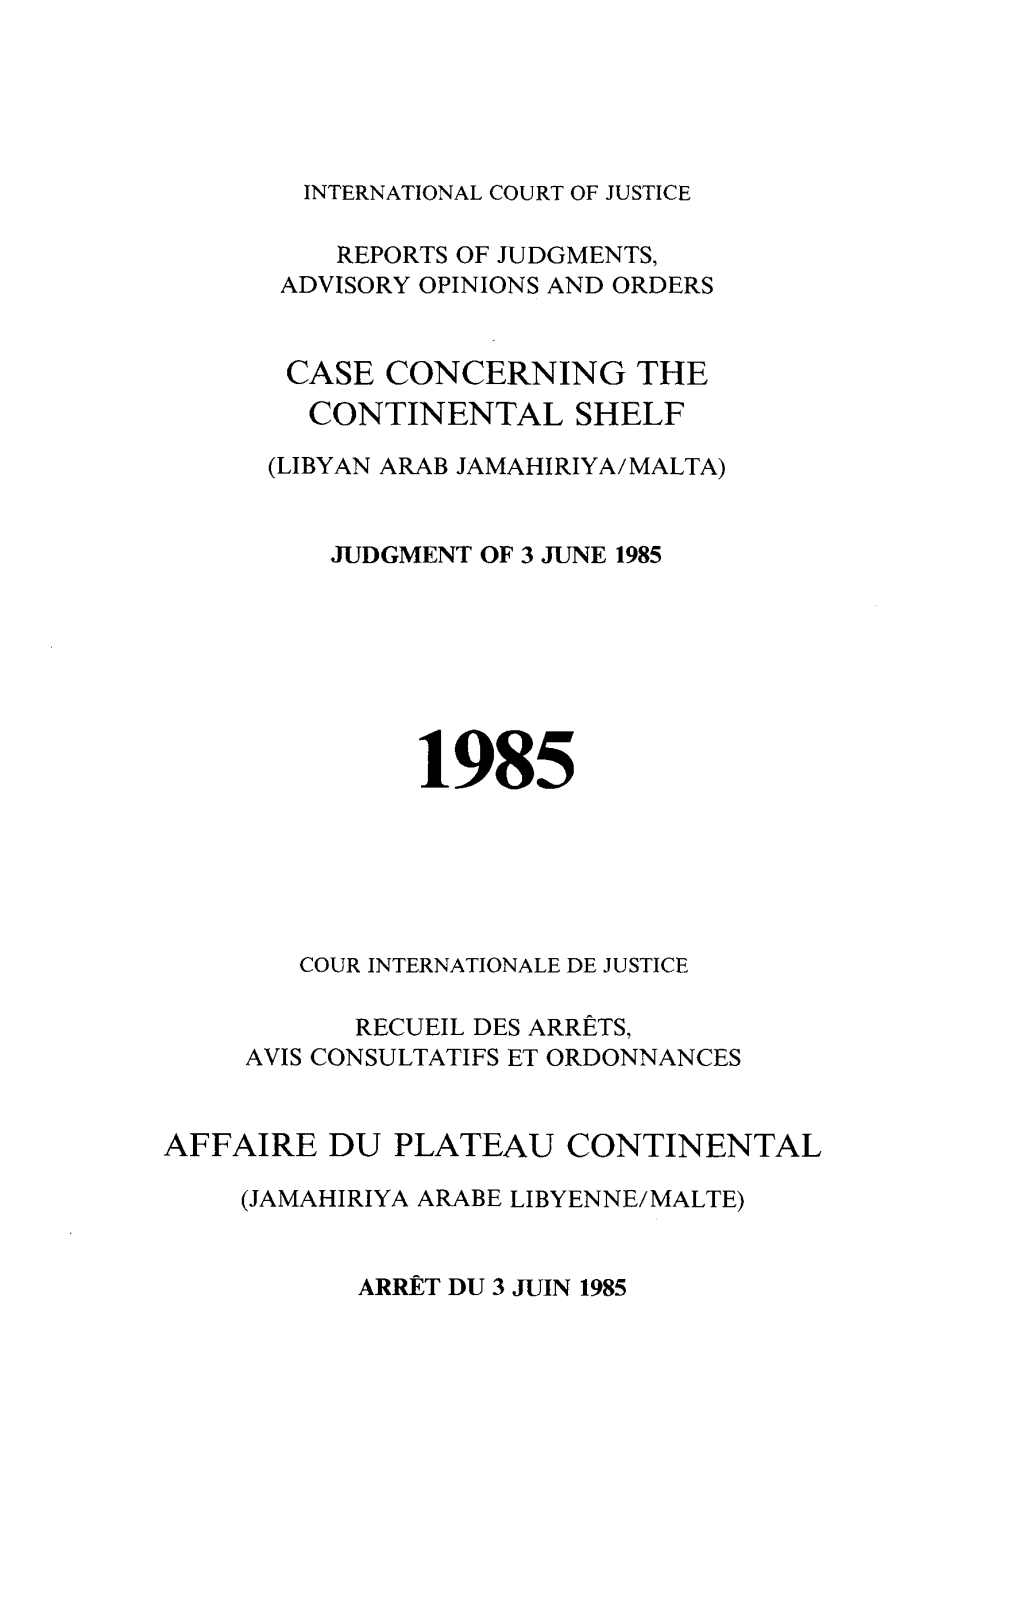 Case Concerning the Continental Shelf (Libyan Arab Jamahiriya/Malta)